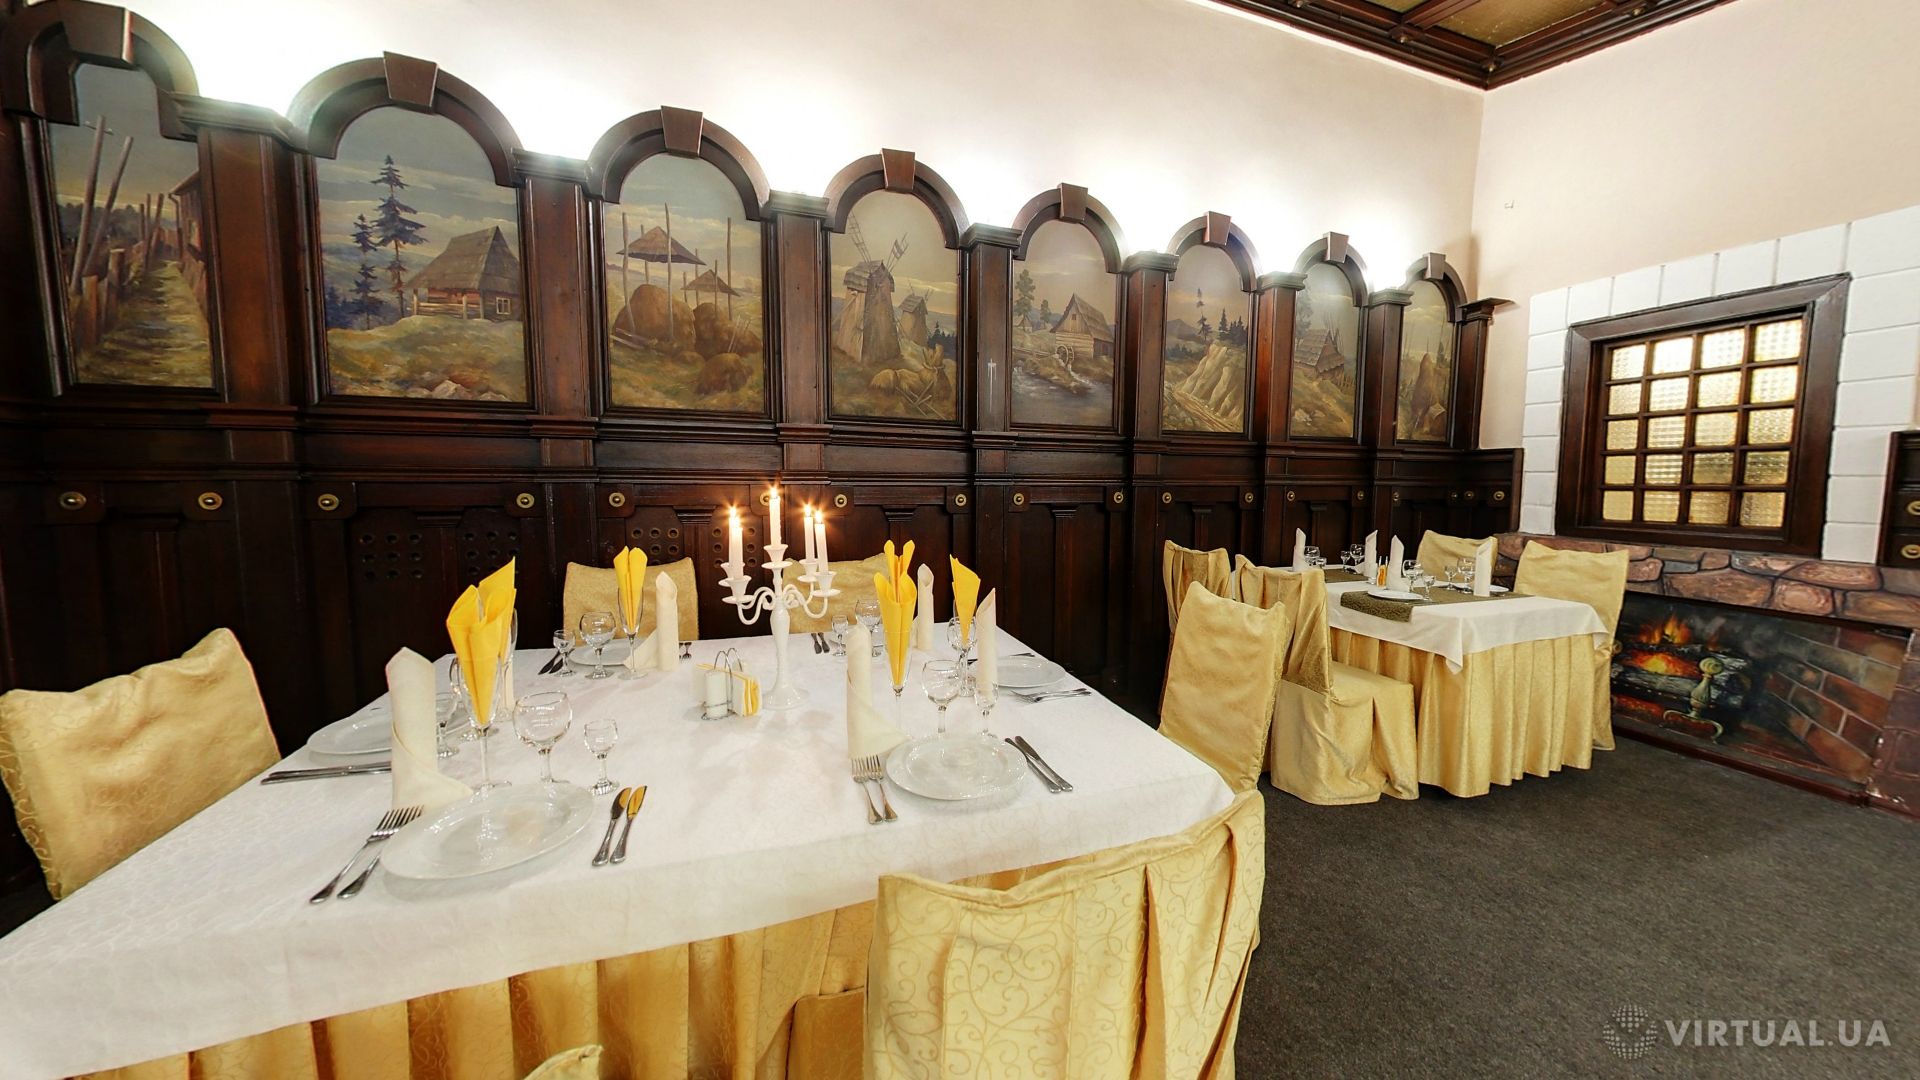 Staryy Royal' Restaurant (Old Piano Restaurant)